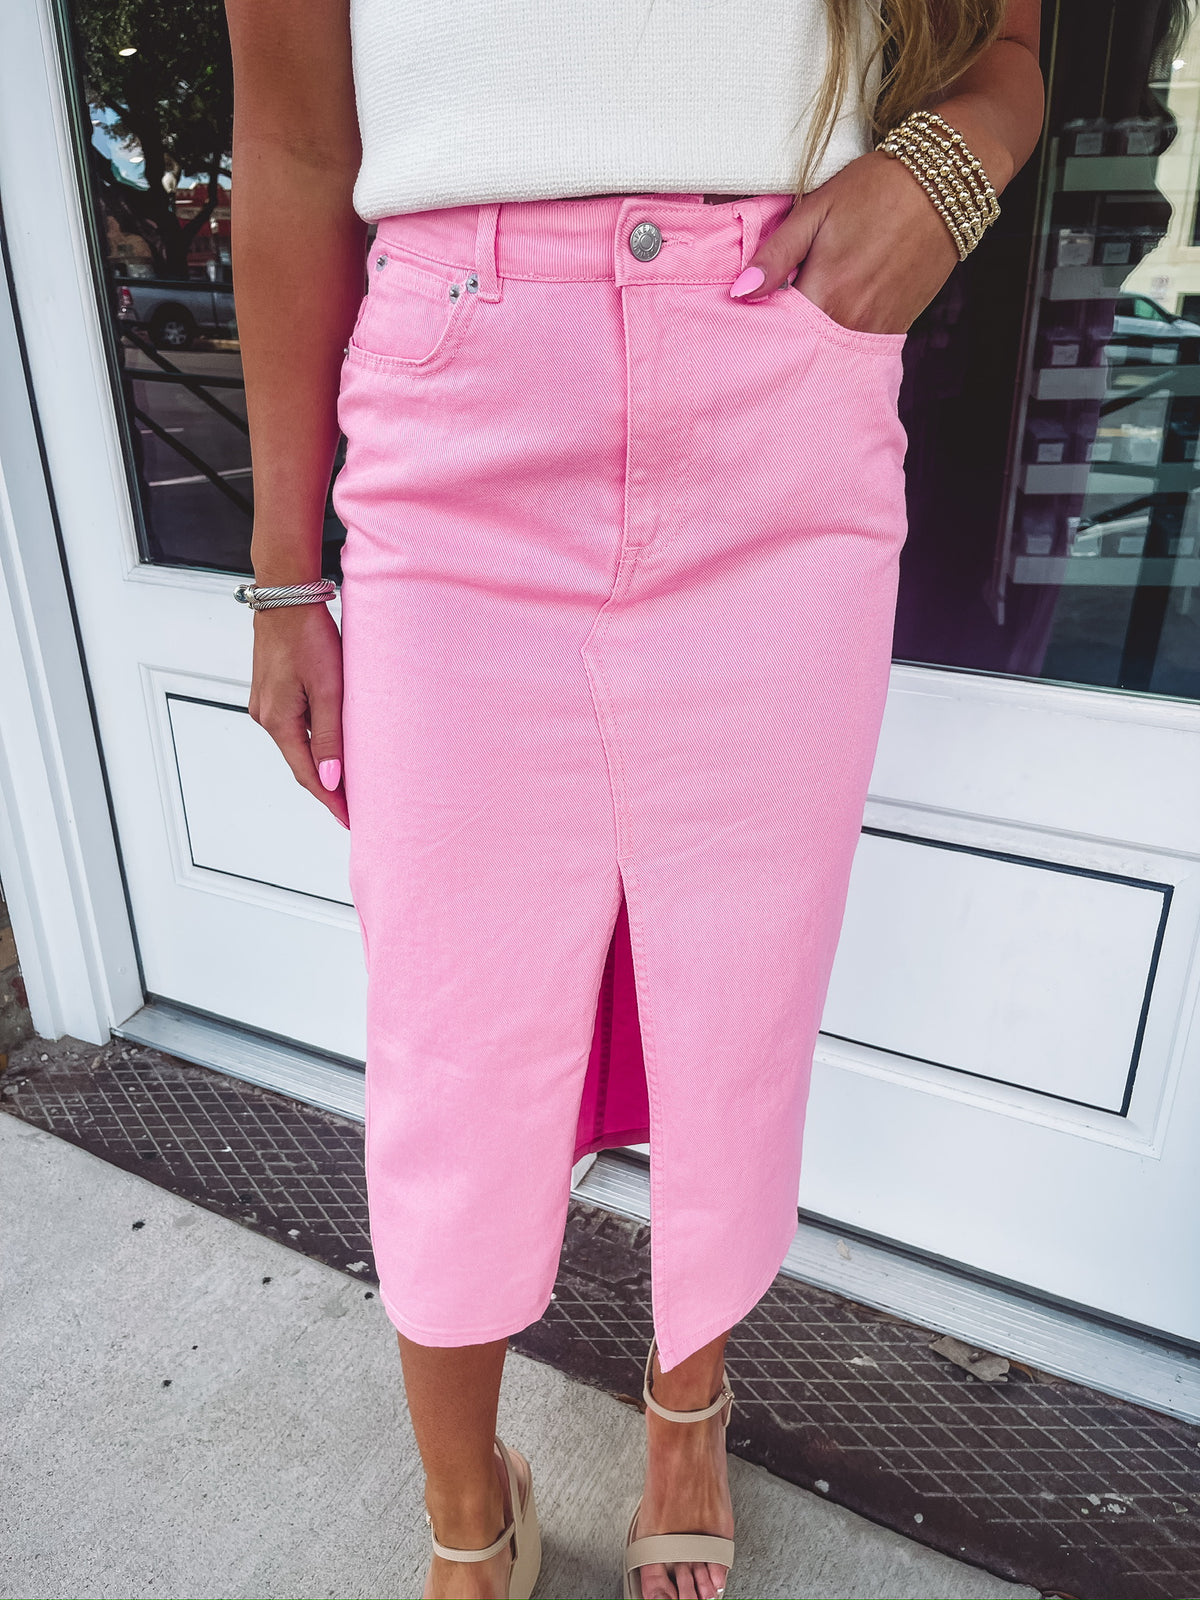 Brandey Skirt in Pink